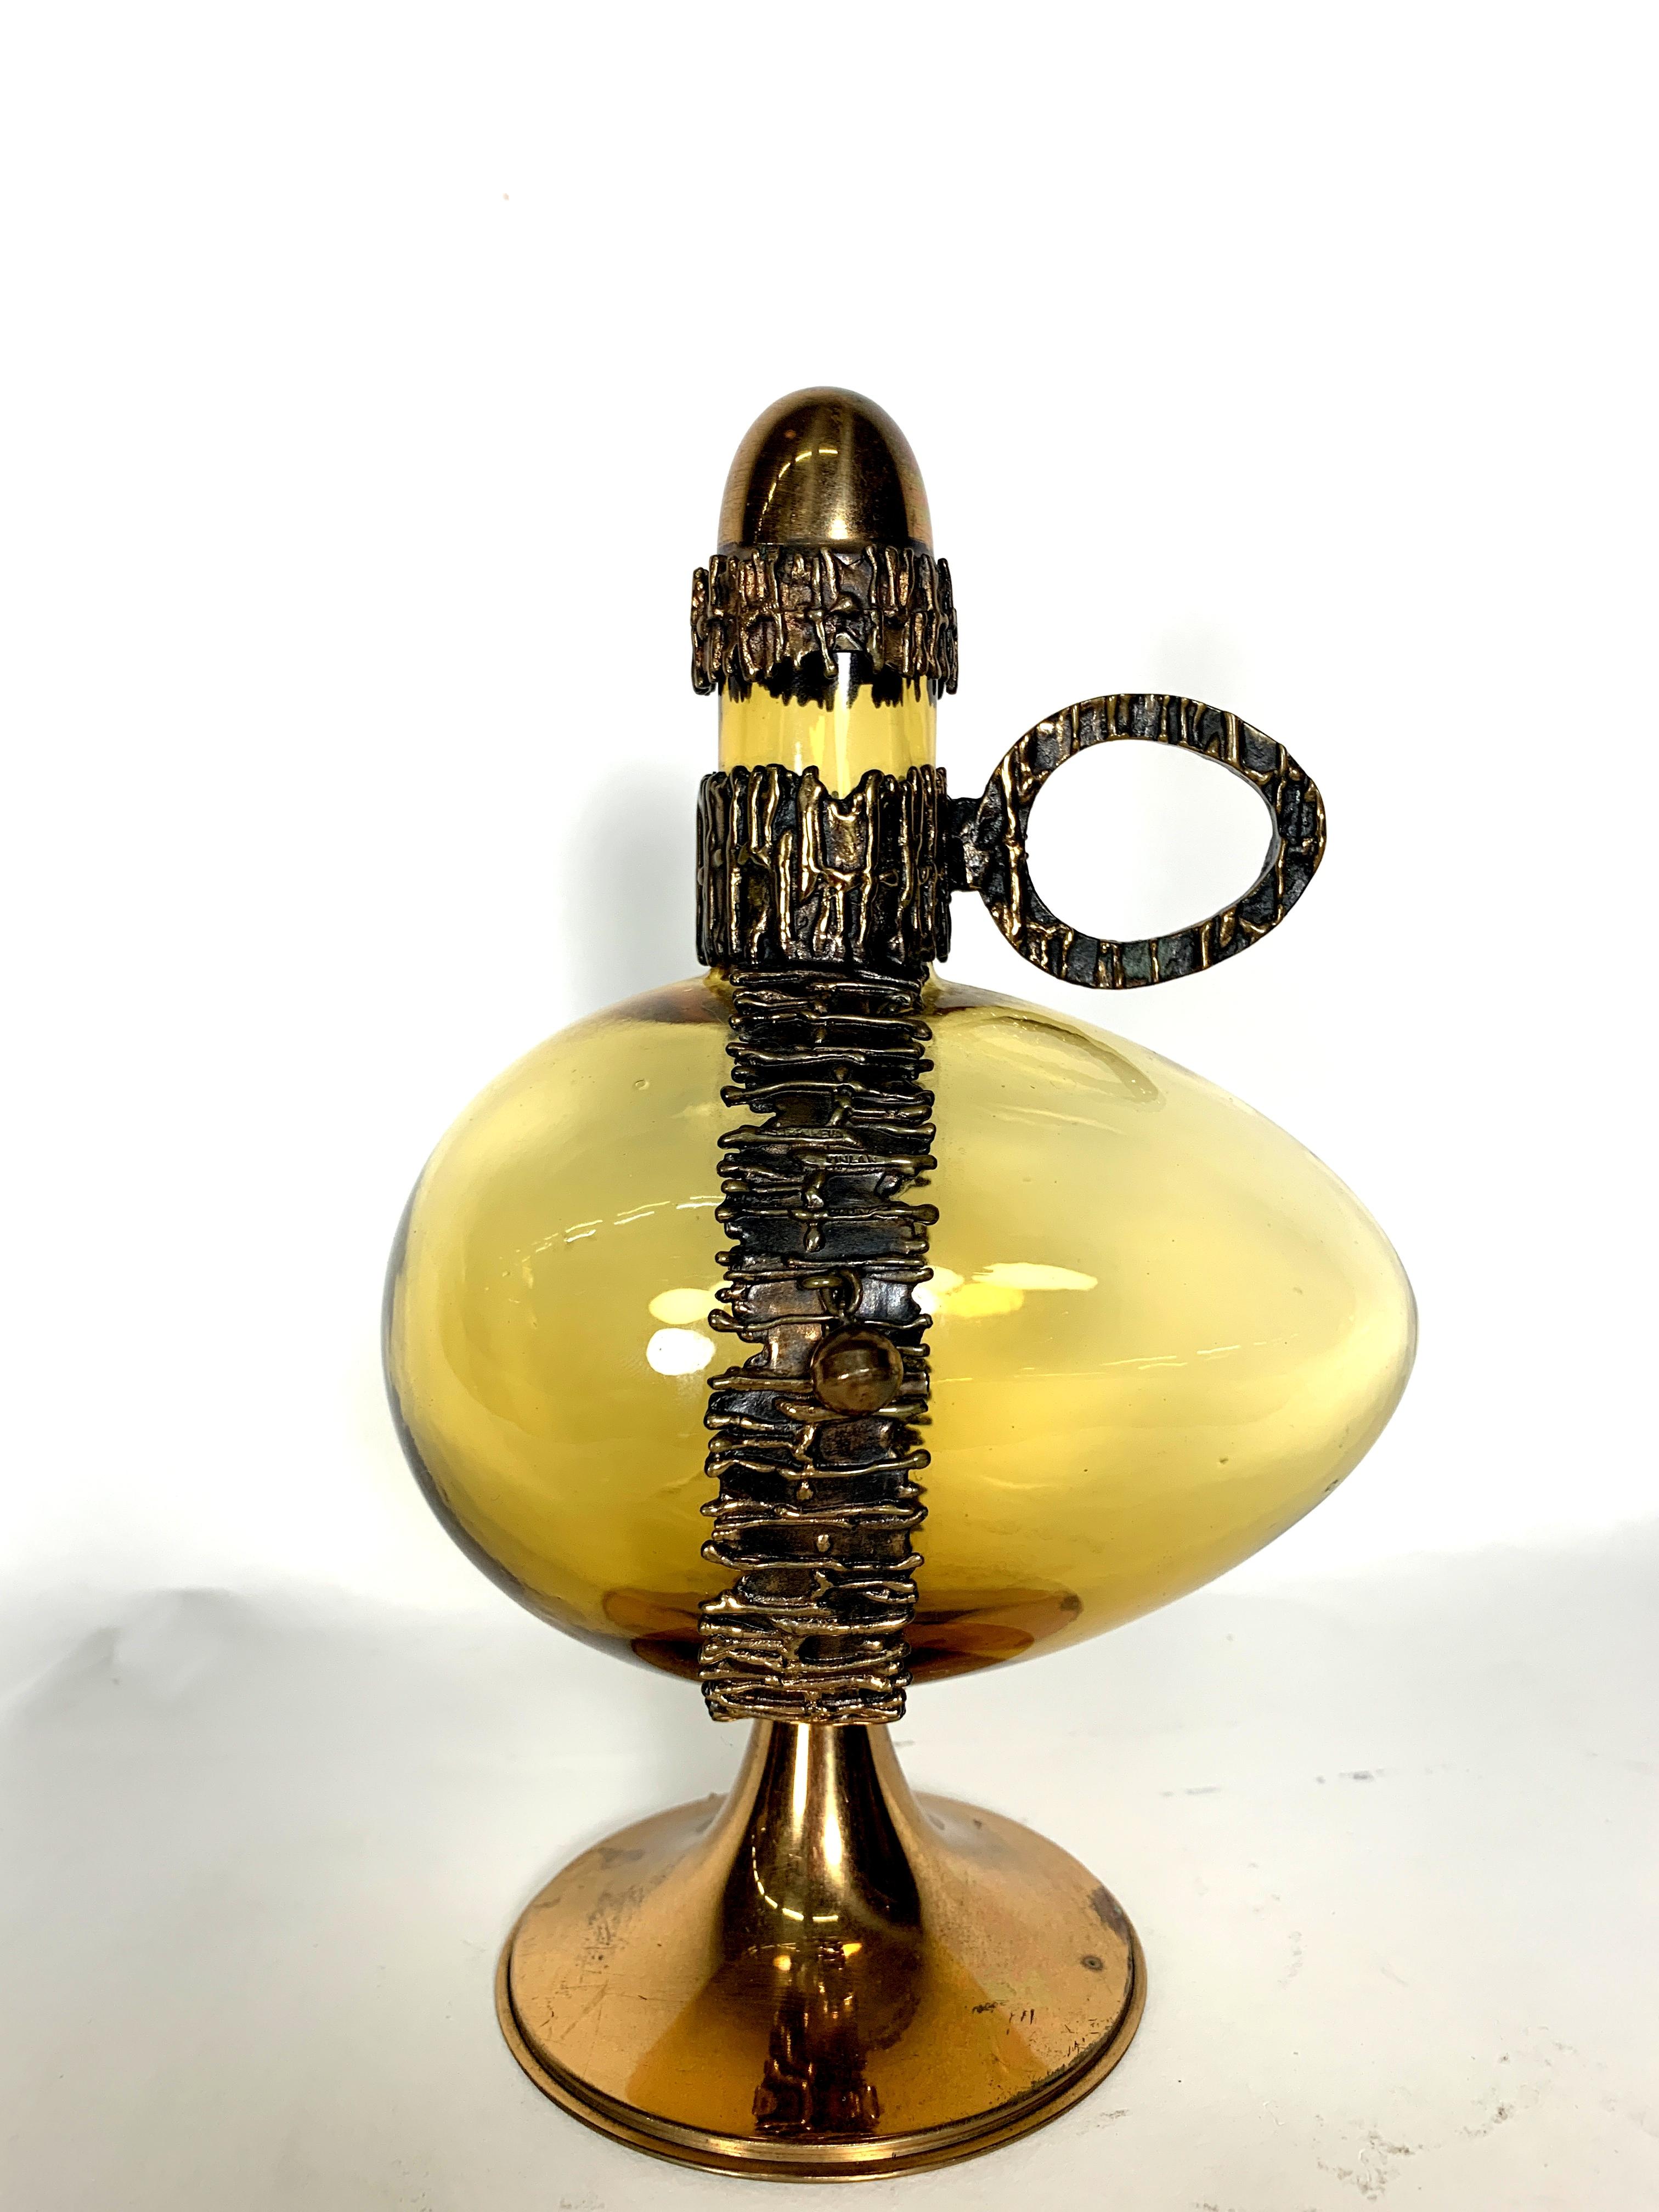 Scandinavian Modern Brass and Colored Glass Liquor Glass, 1960s, from Pentti Sarpaneva, Finland For Sale